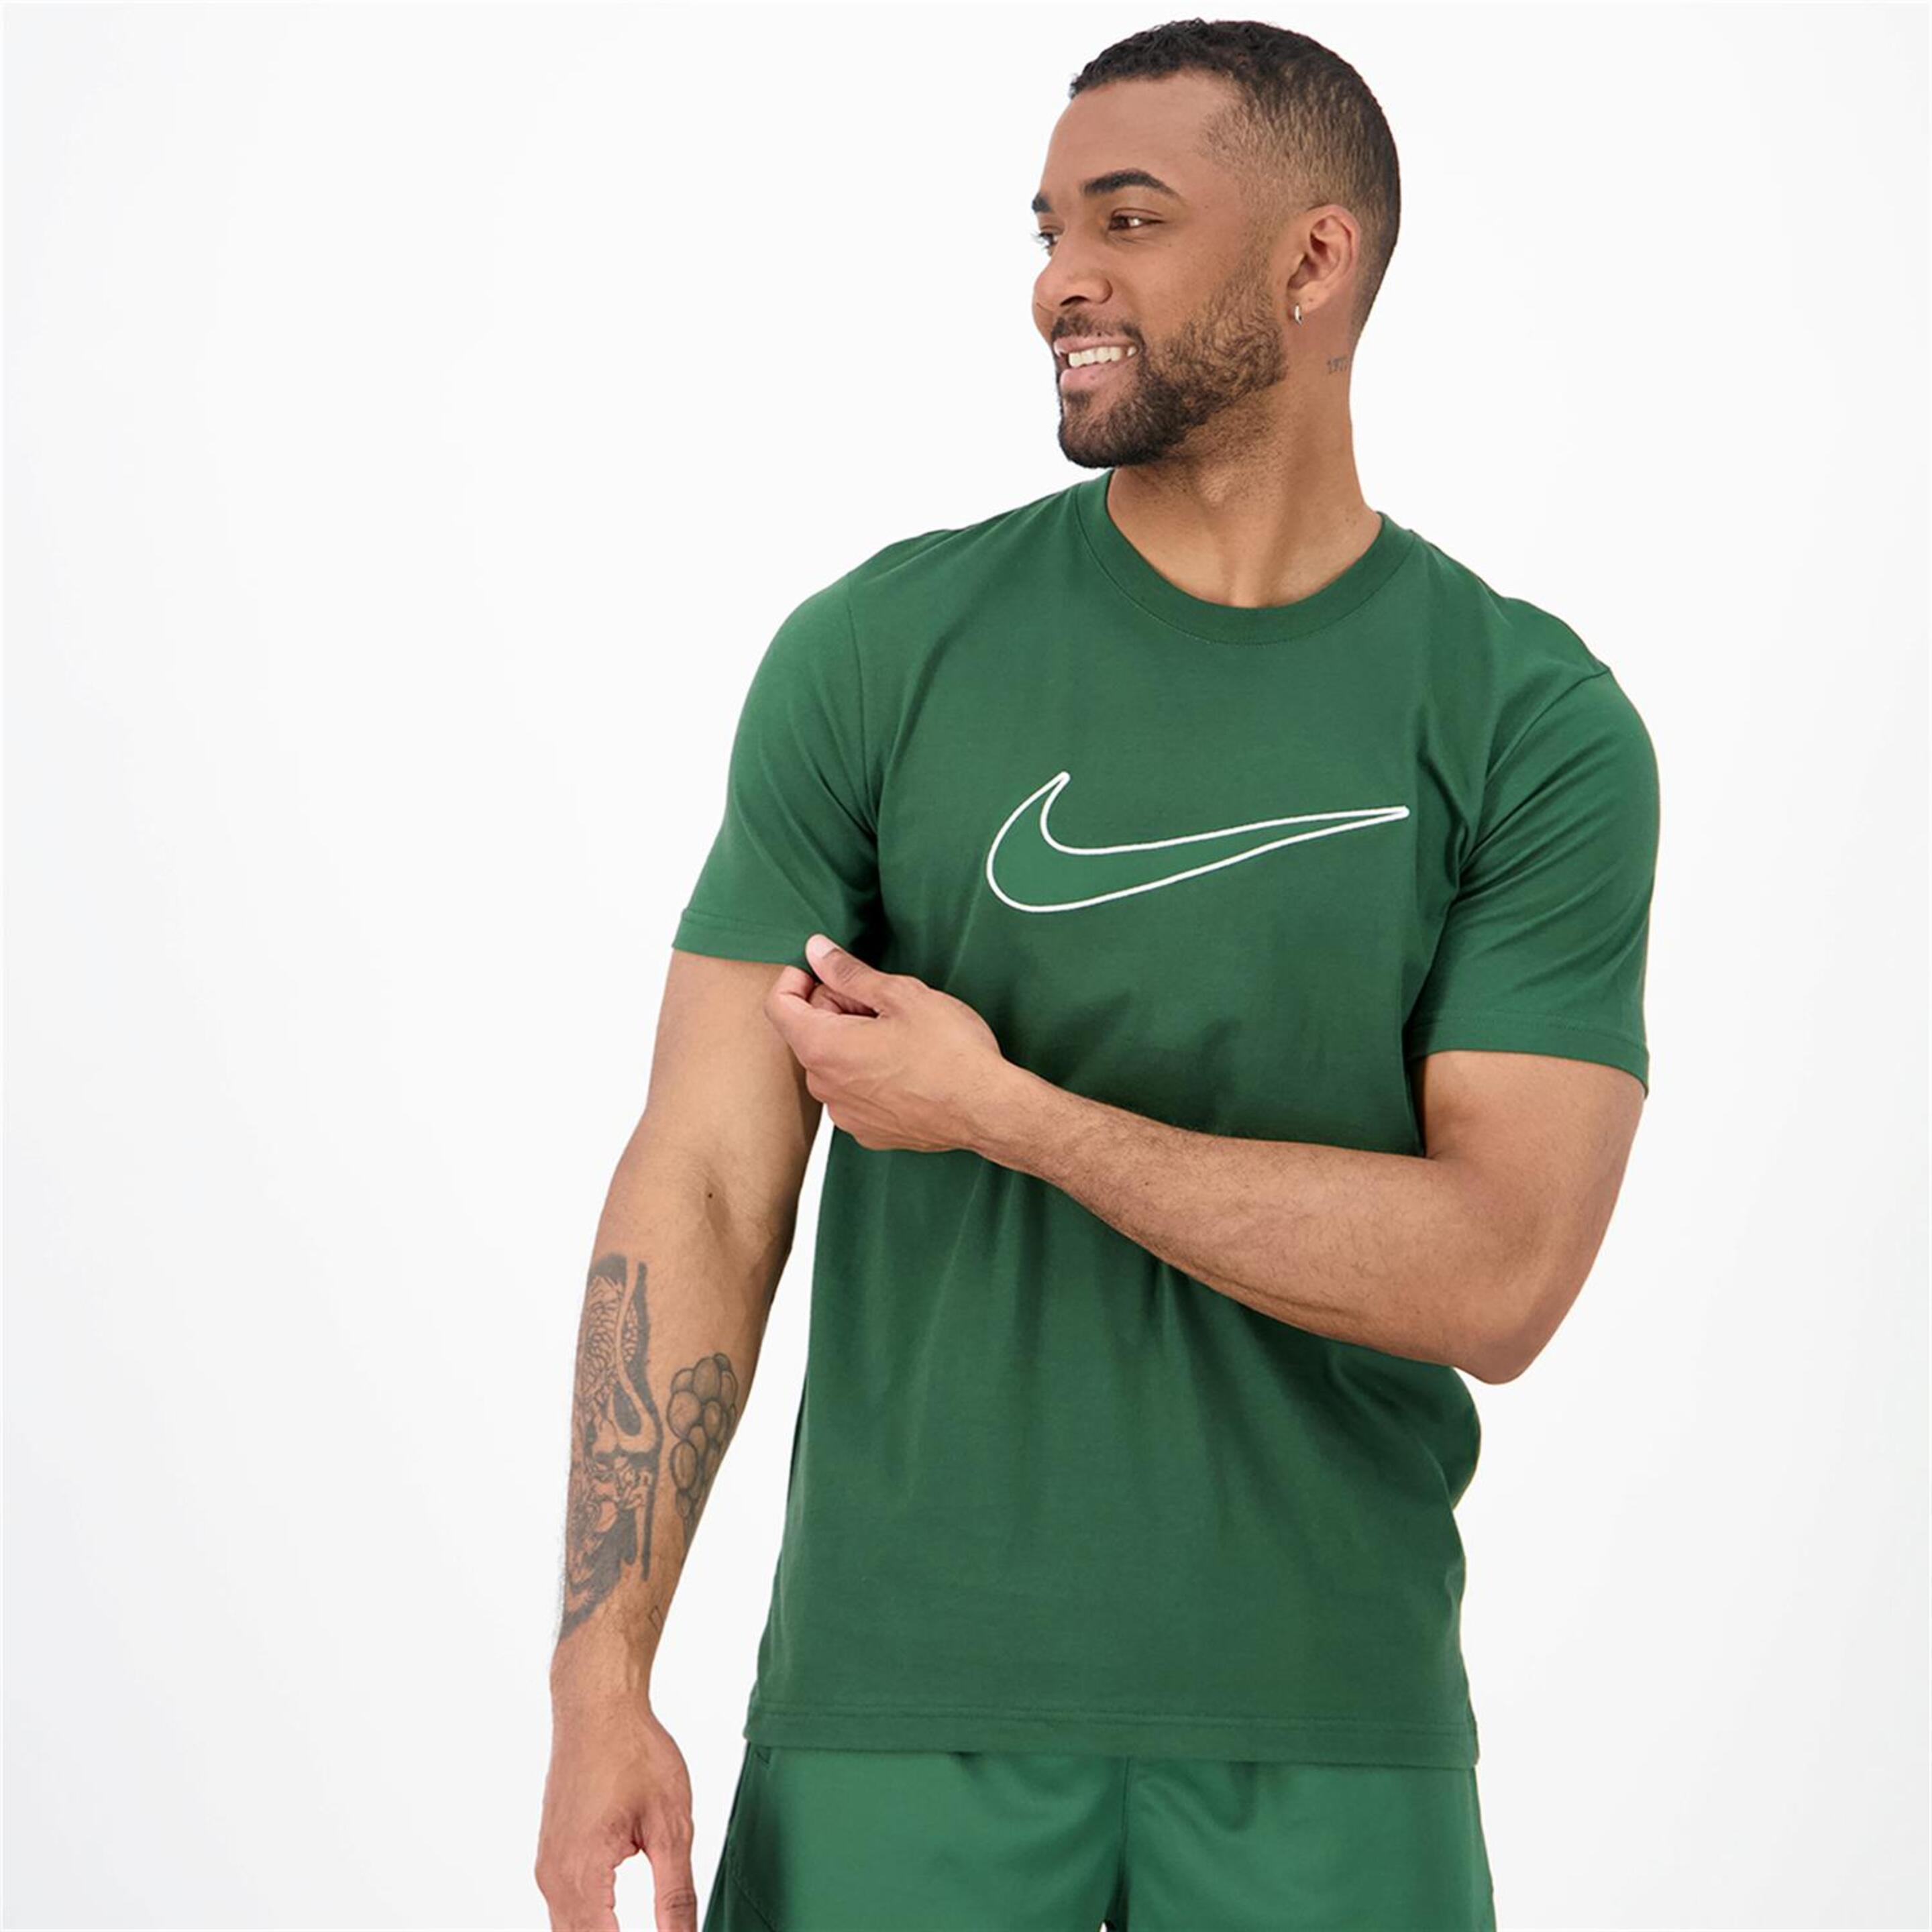 Nike Sp - verde - Camiseta Hombre